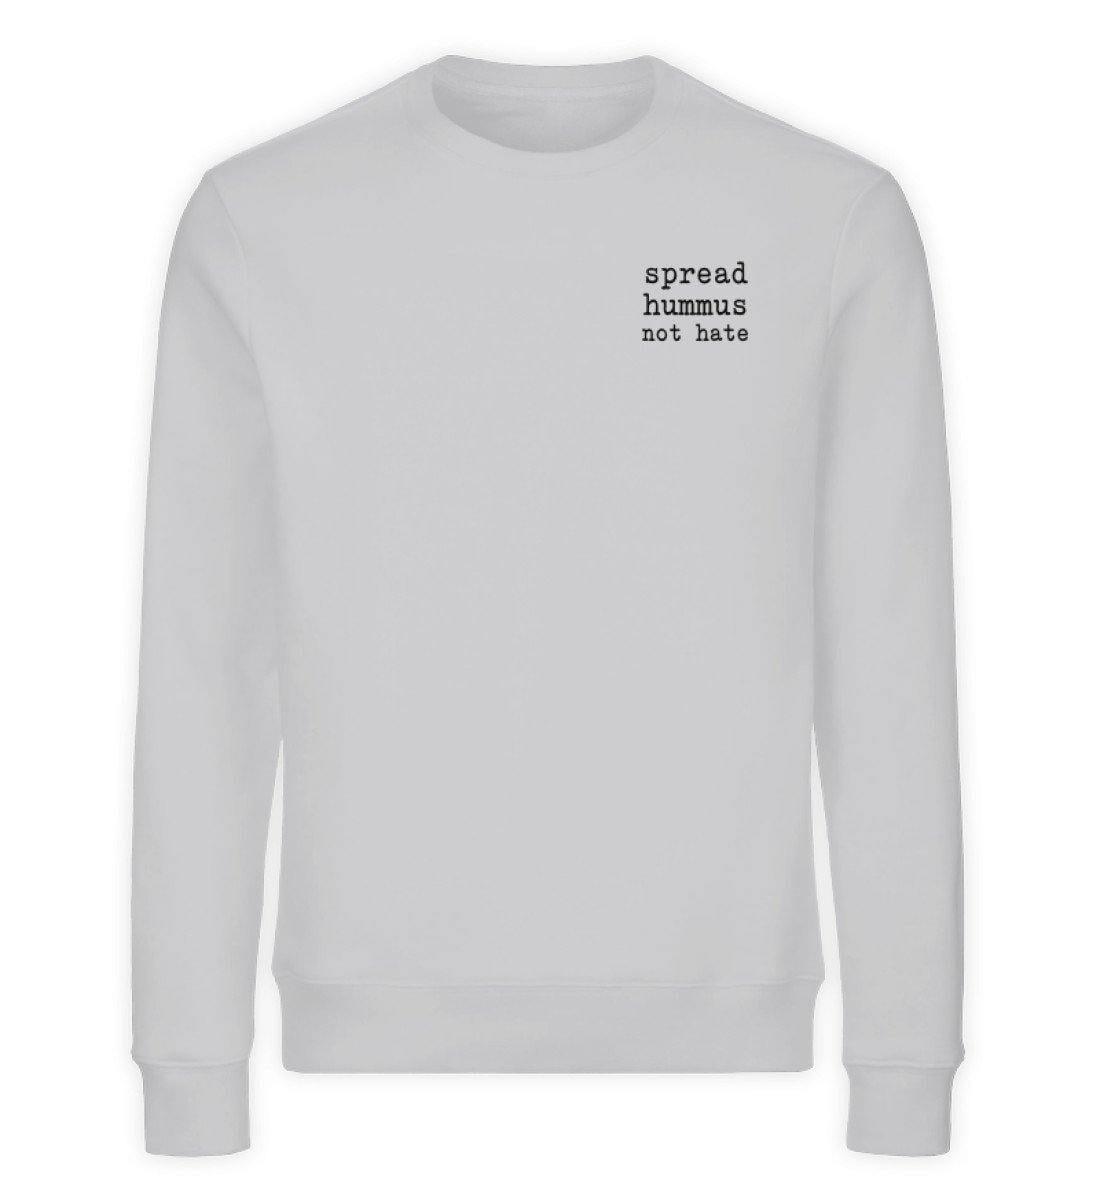 spread hummus not hate - Unisex Organic Sweatshirt - M - Team Vegan © vegan t shirt